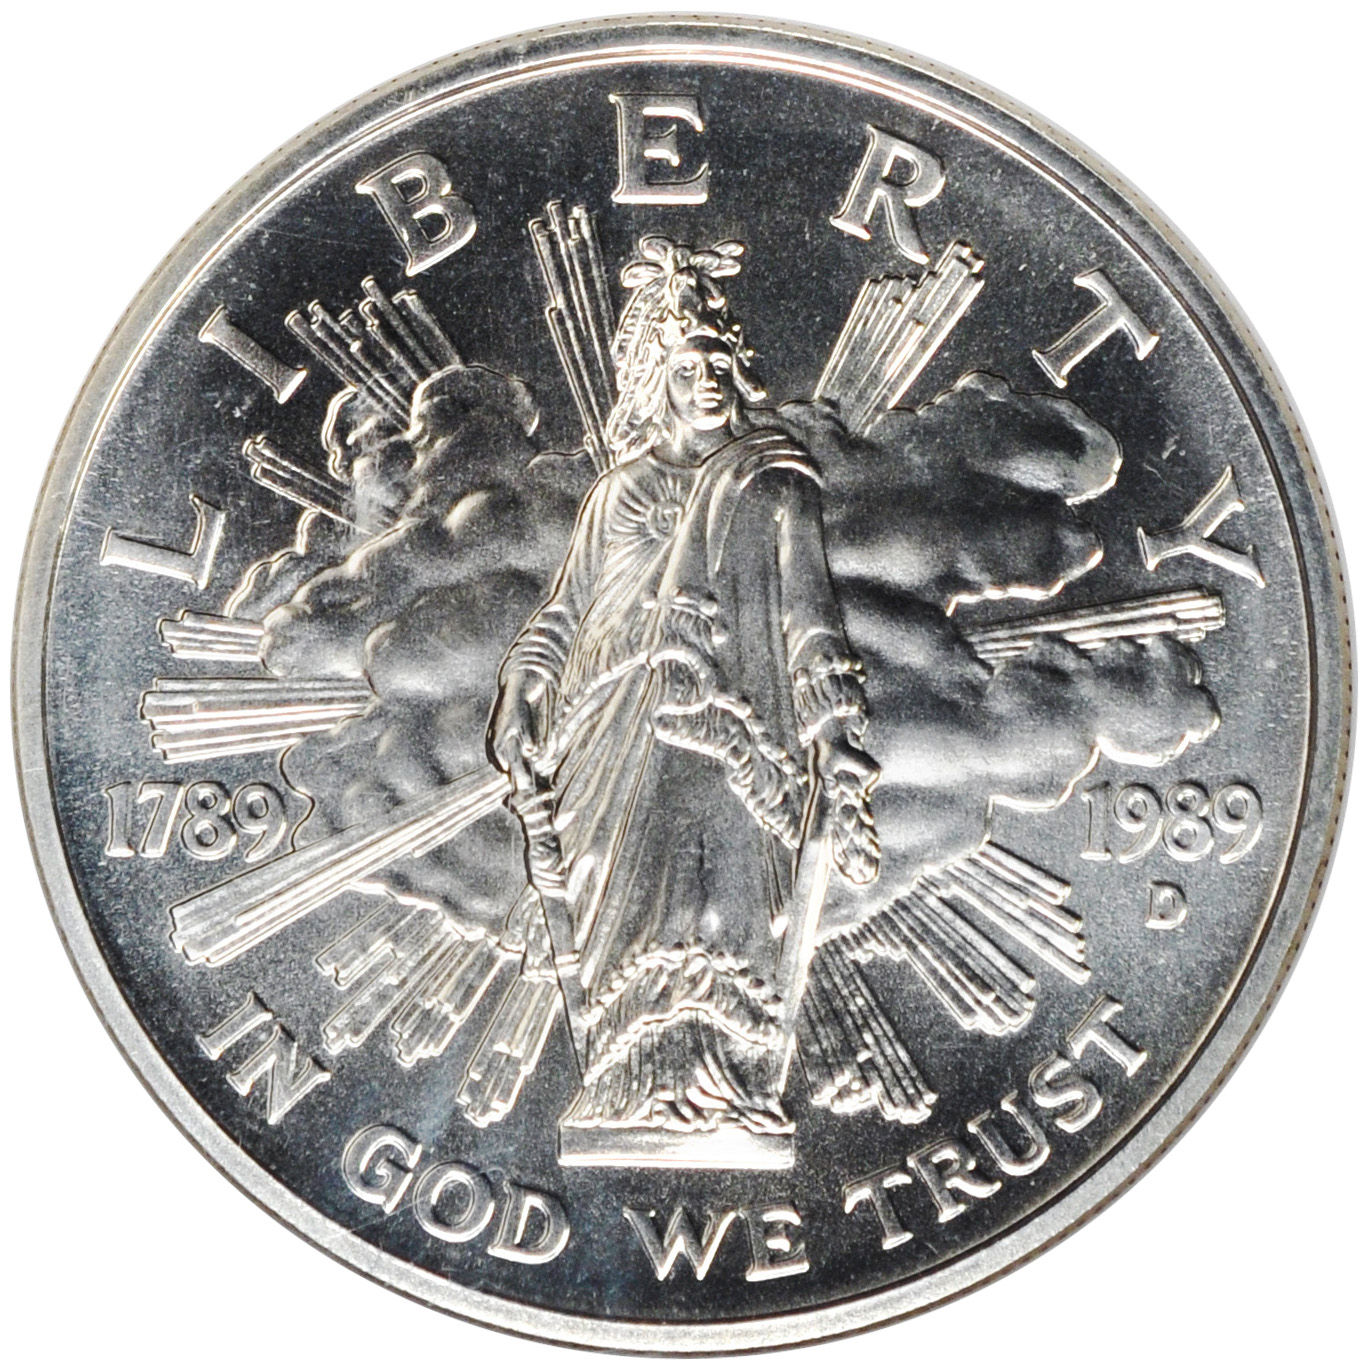 Value of 1989 $1 Congress Silver Coin | Sell Silver Coins